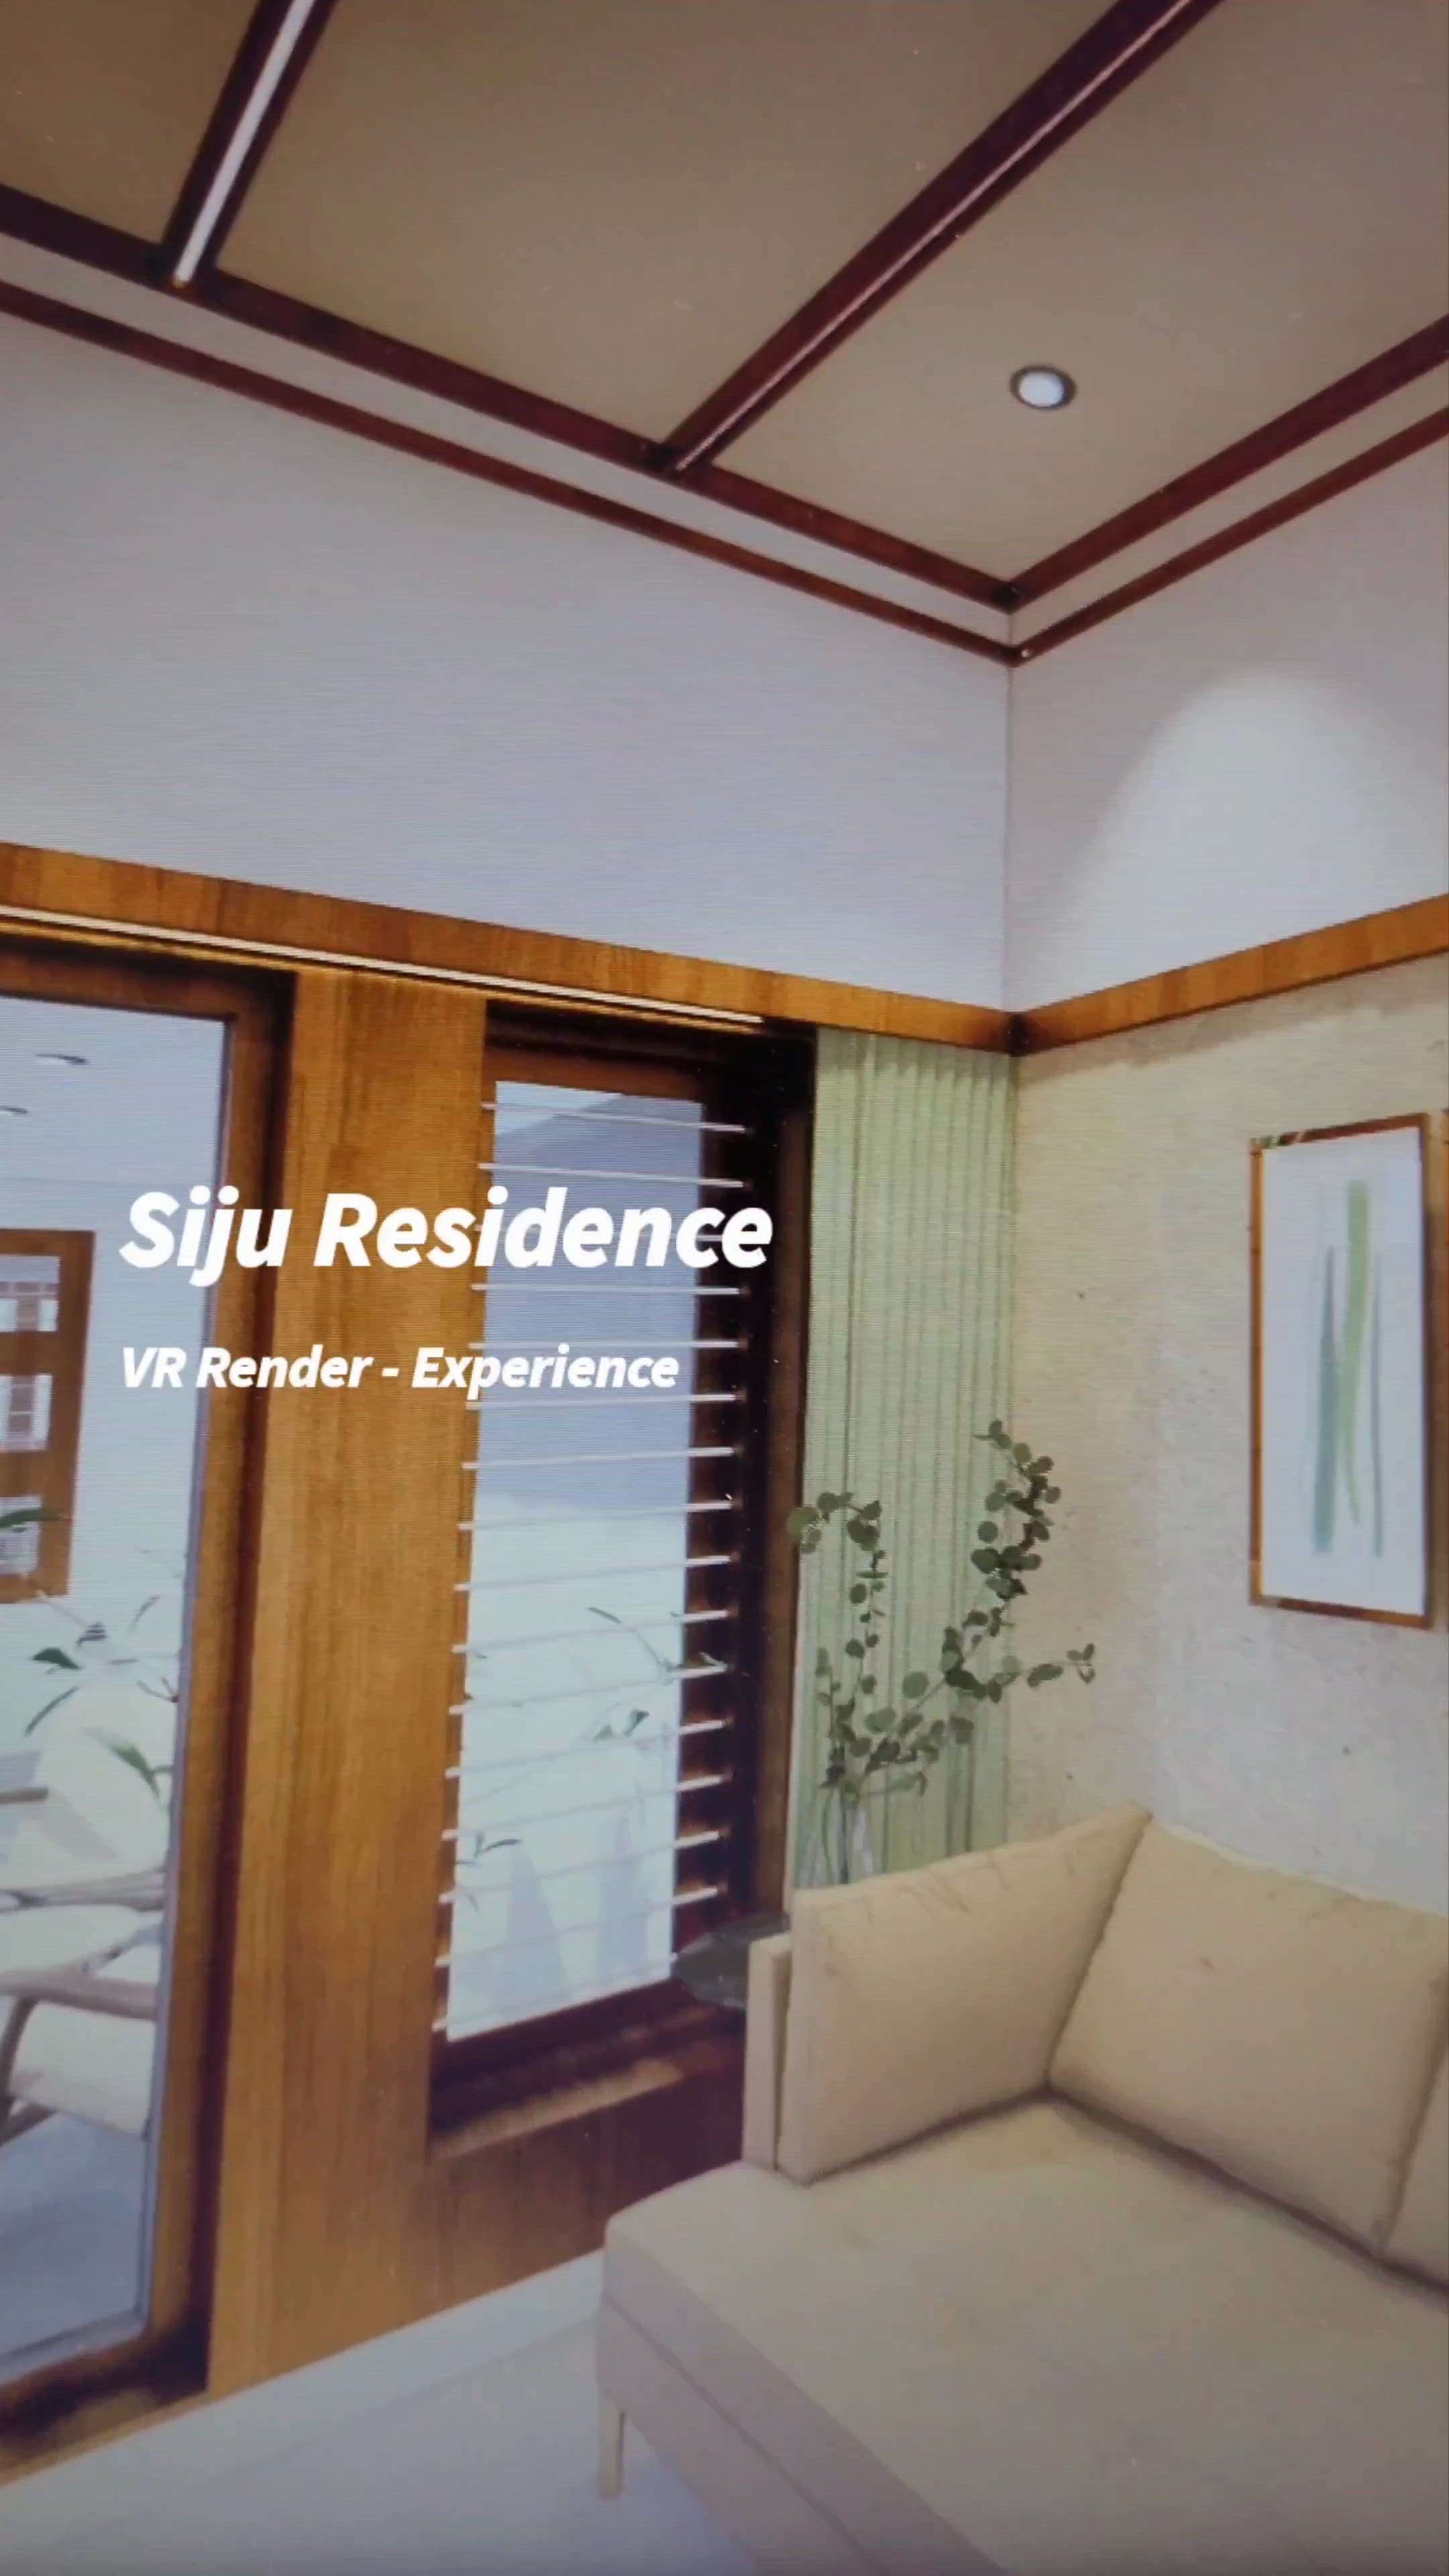 Siju Residence at Irinjalakuda - VR Render
 #Architect #Interior